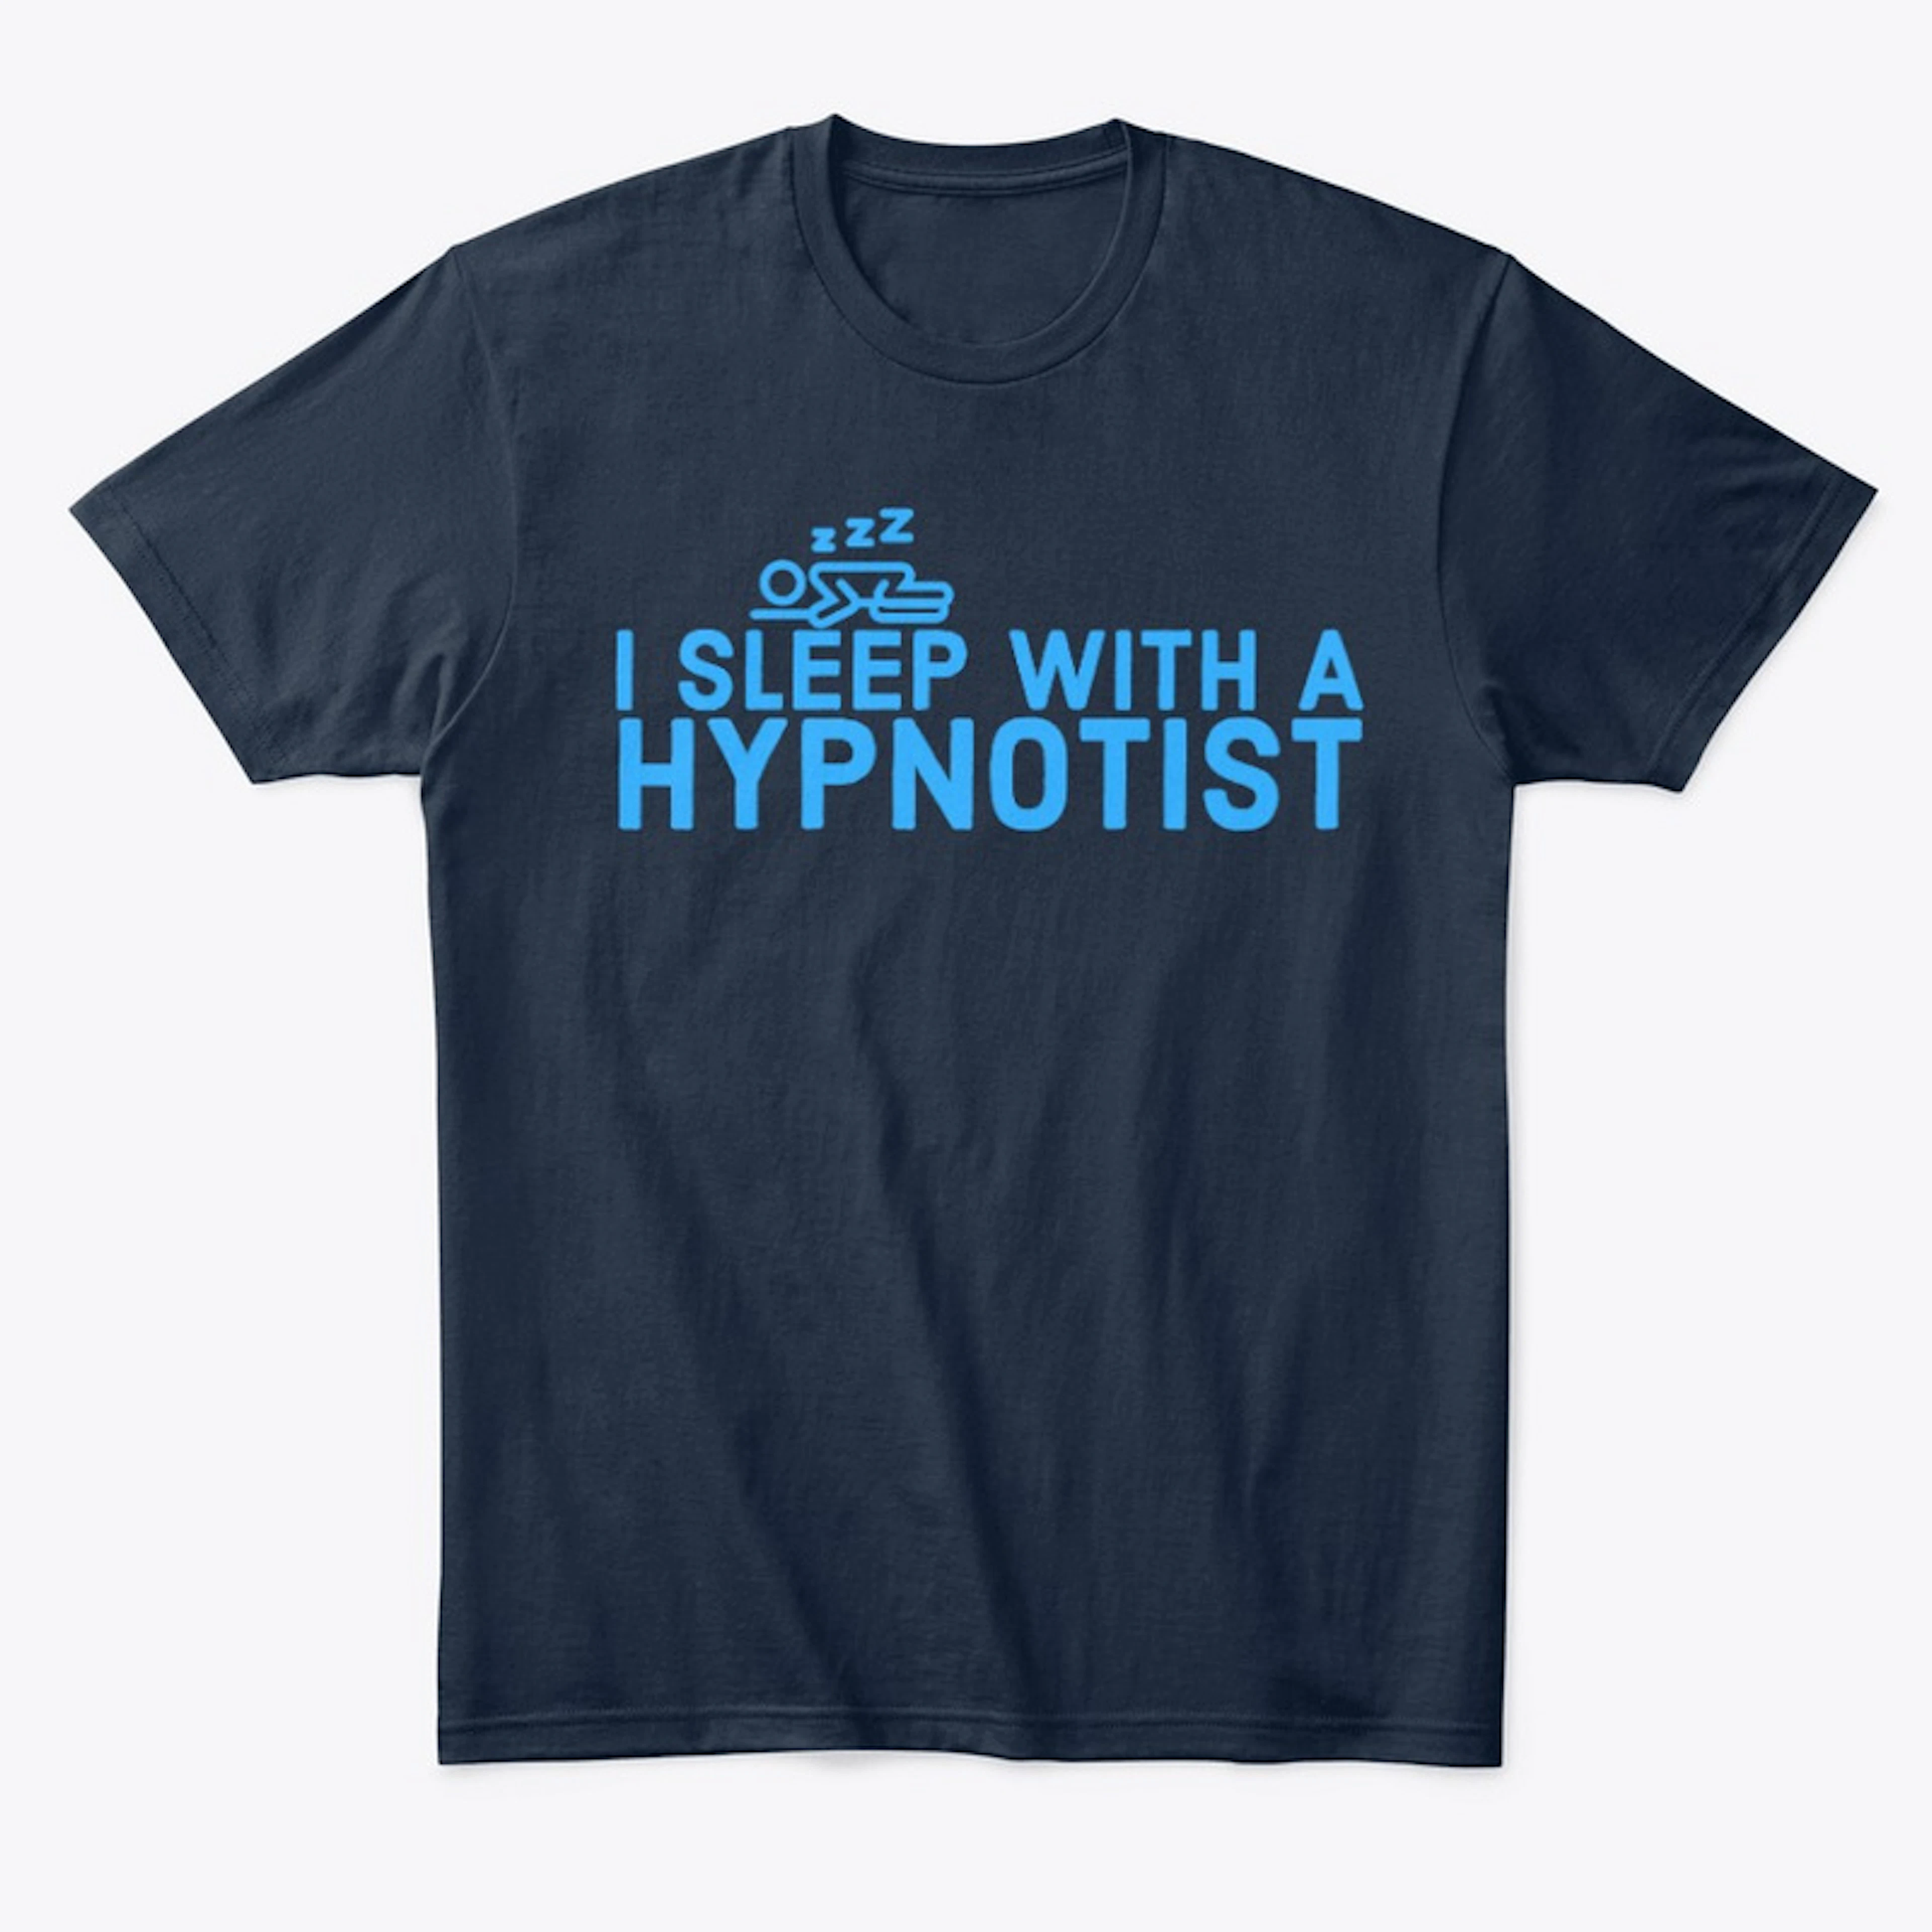 I Sleep with a Hypnotist Tee Shirt